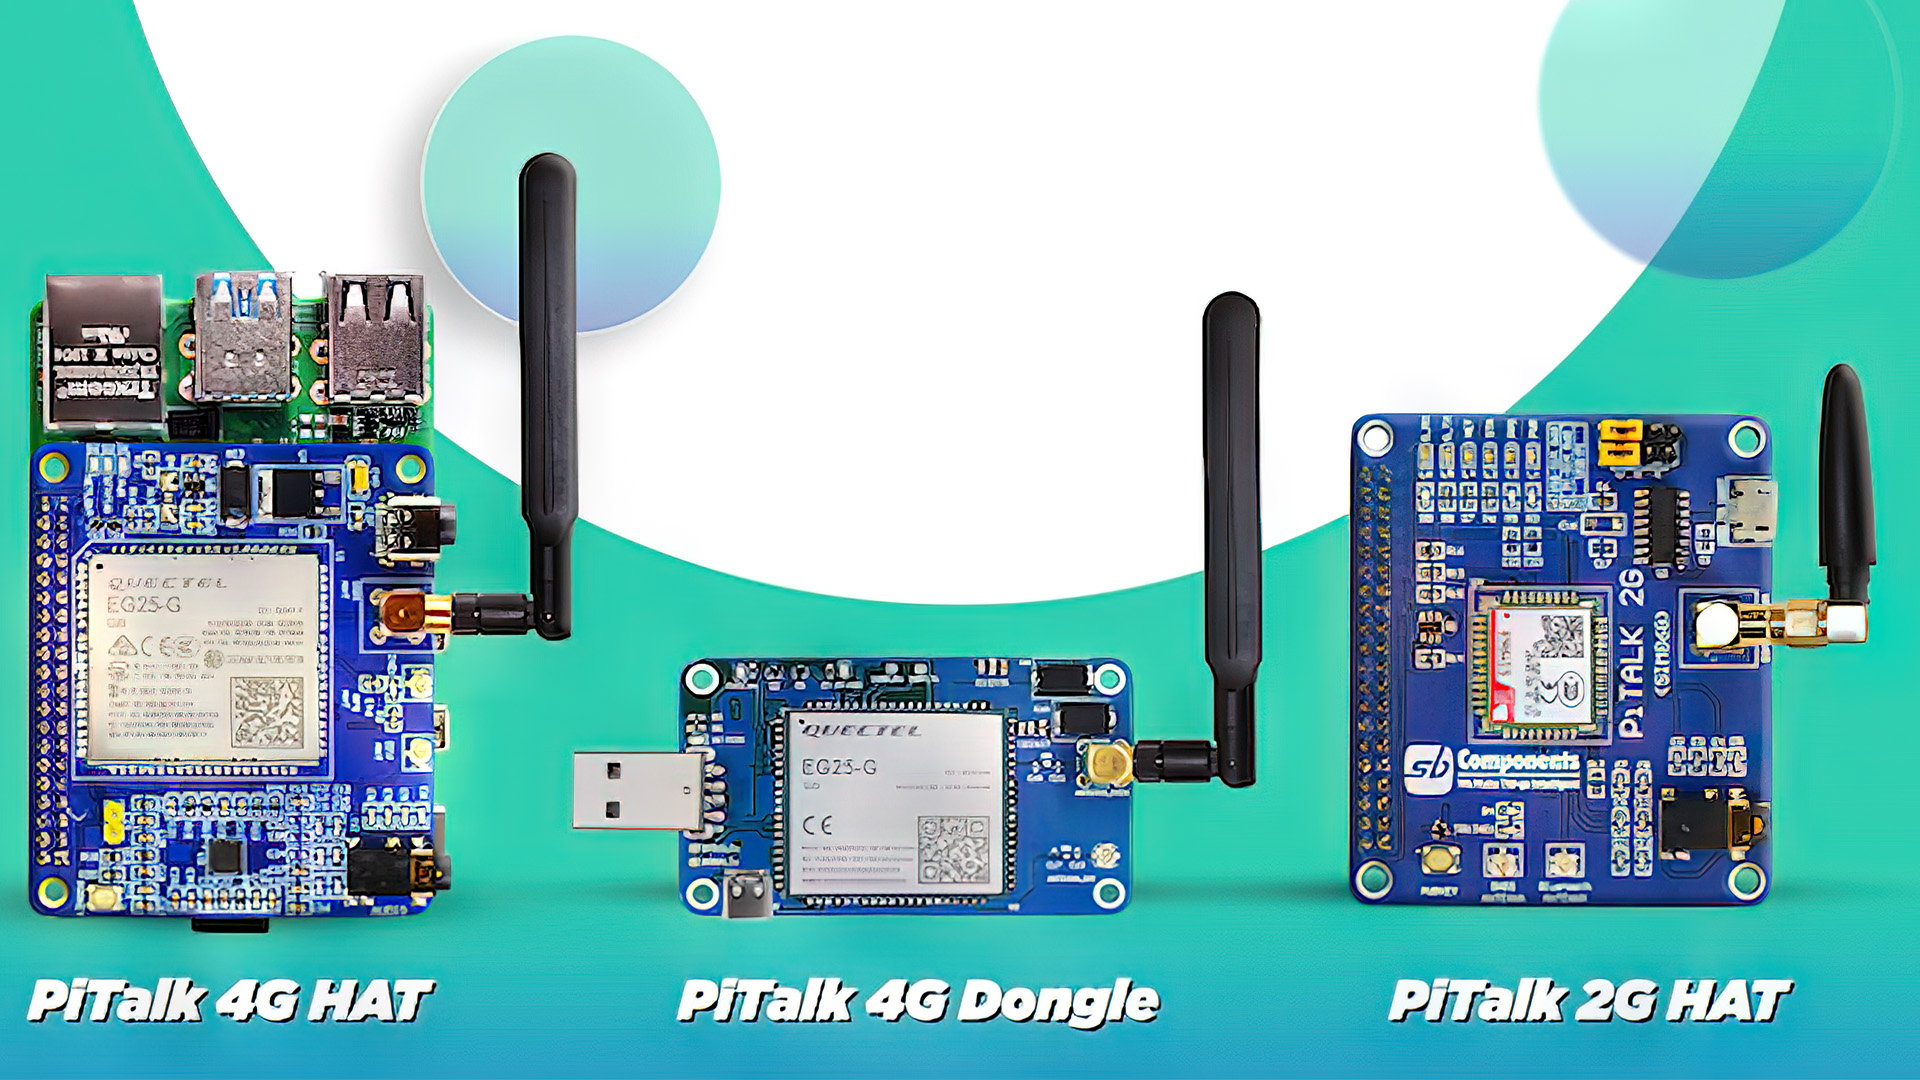 The PiTalk modules